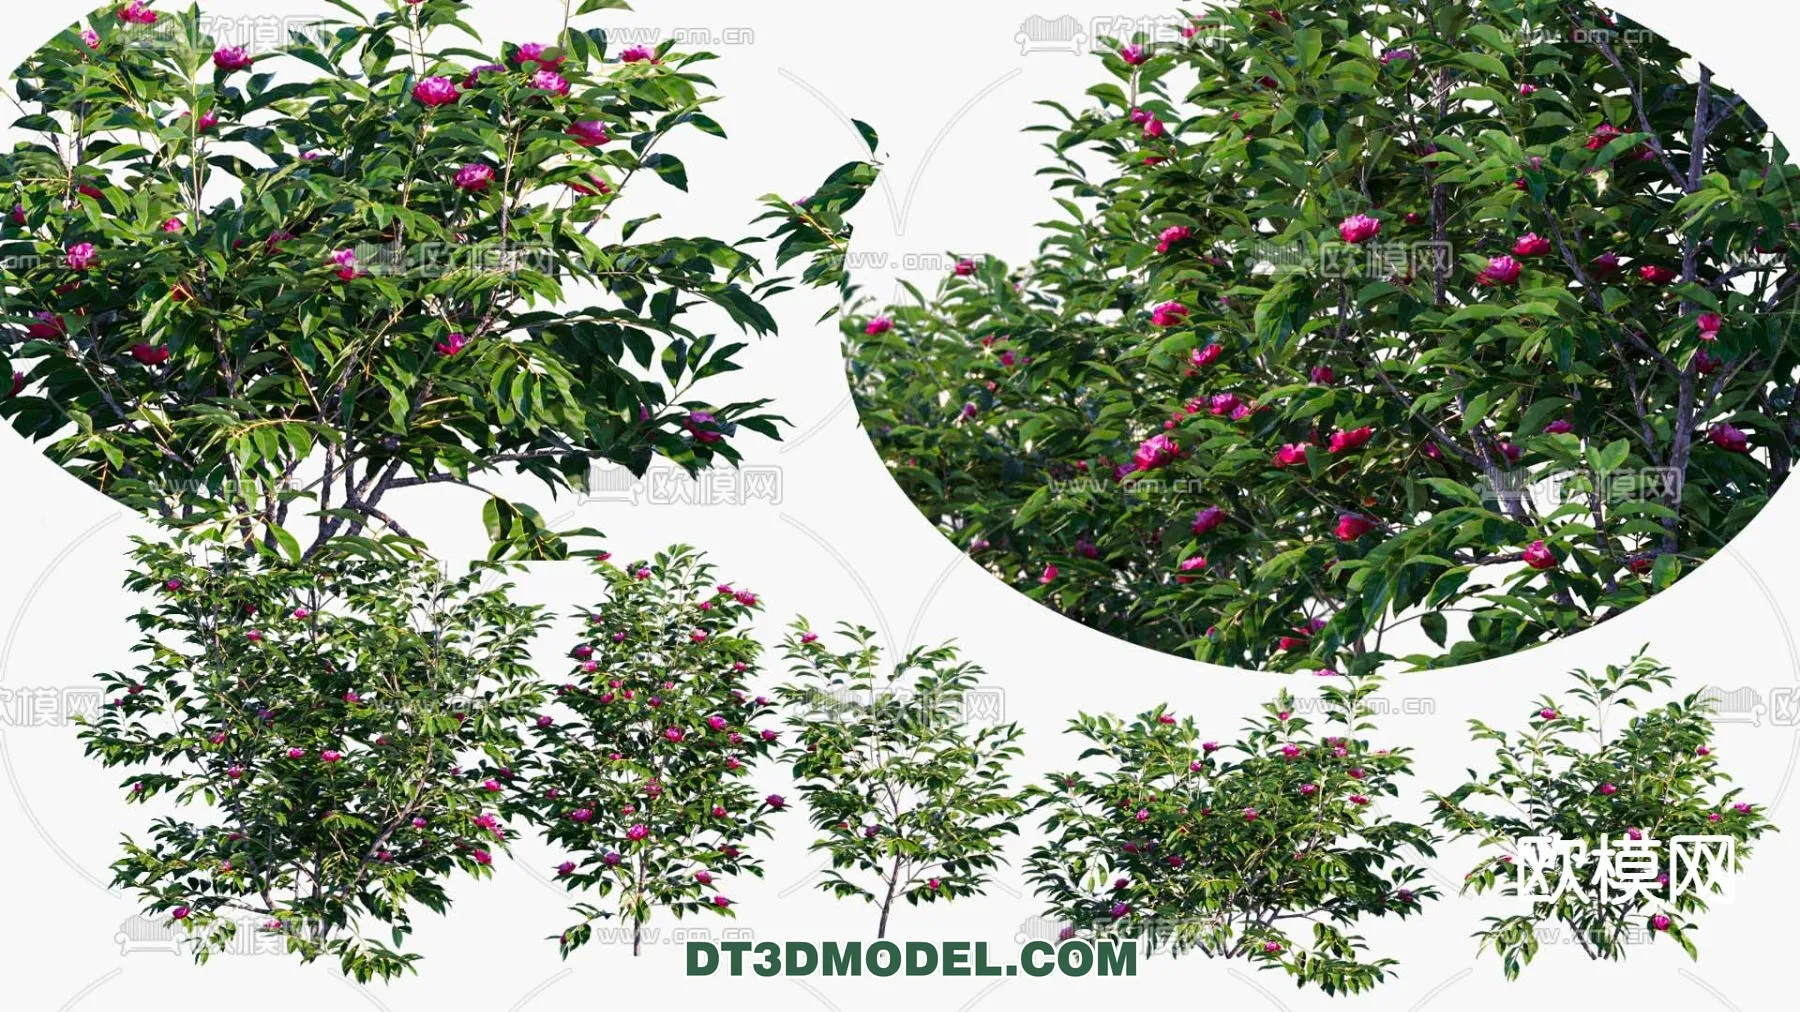 PLANTS – BUSH – VRAY / CORONA – 3D MODEL – 285